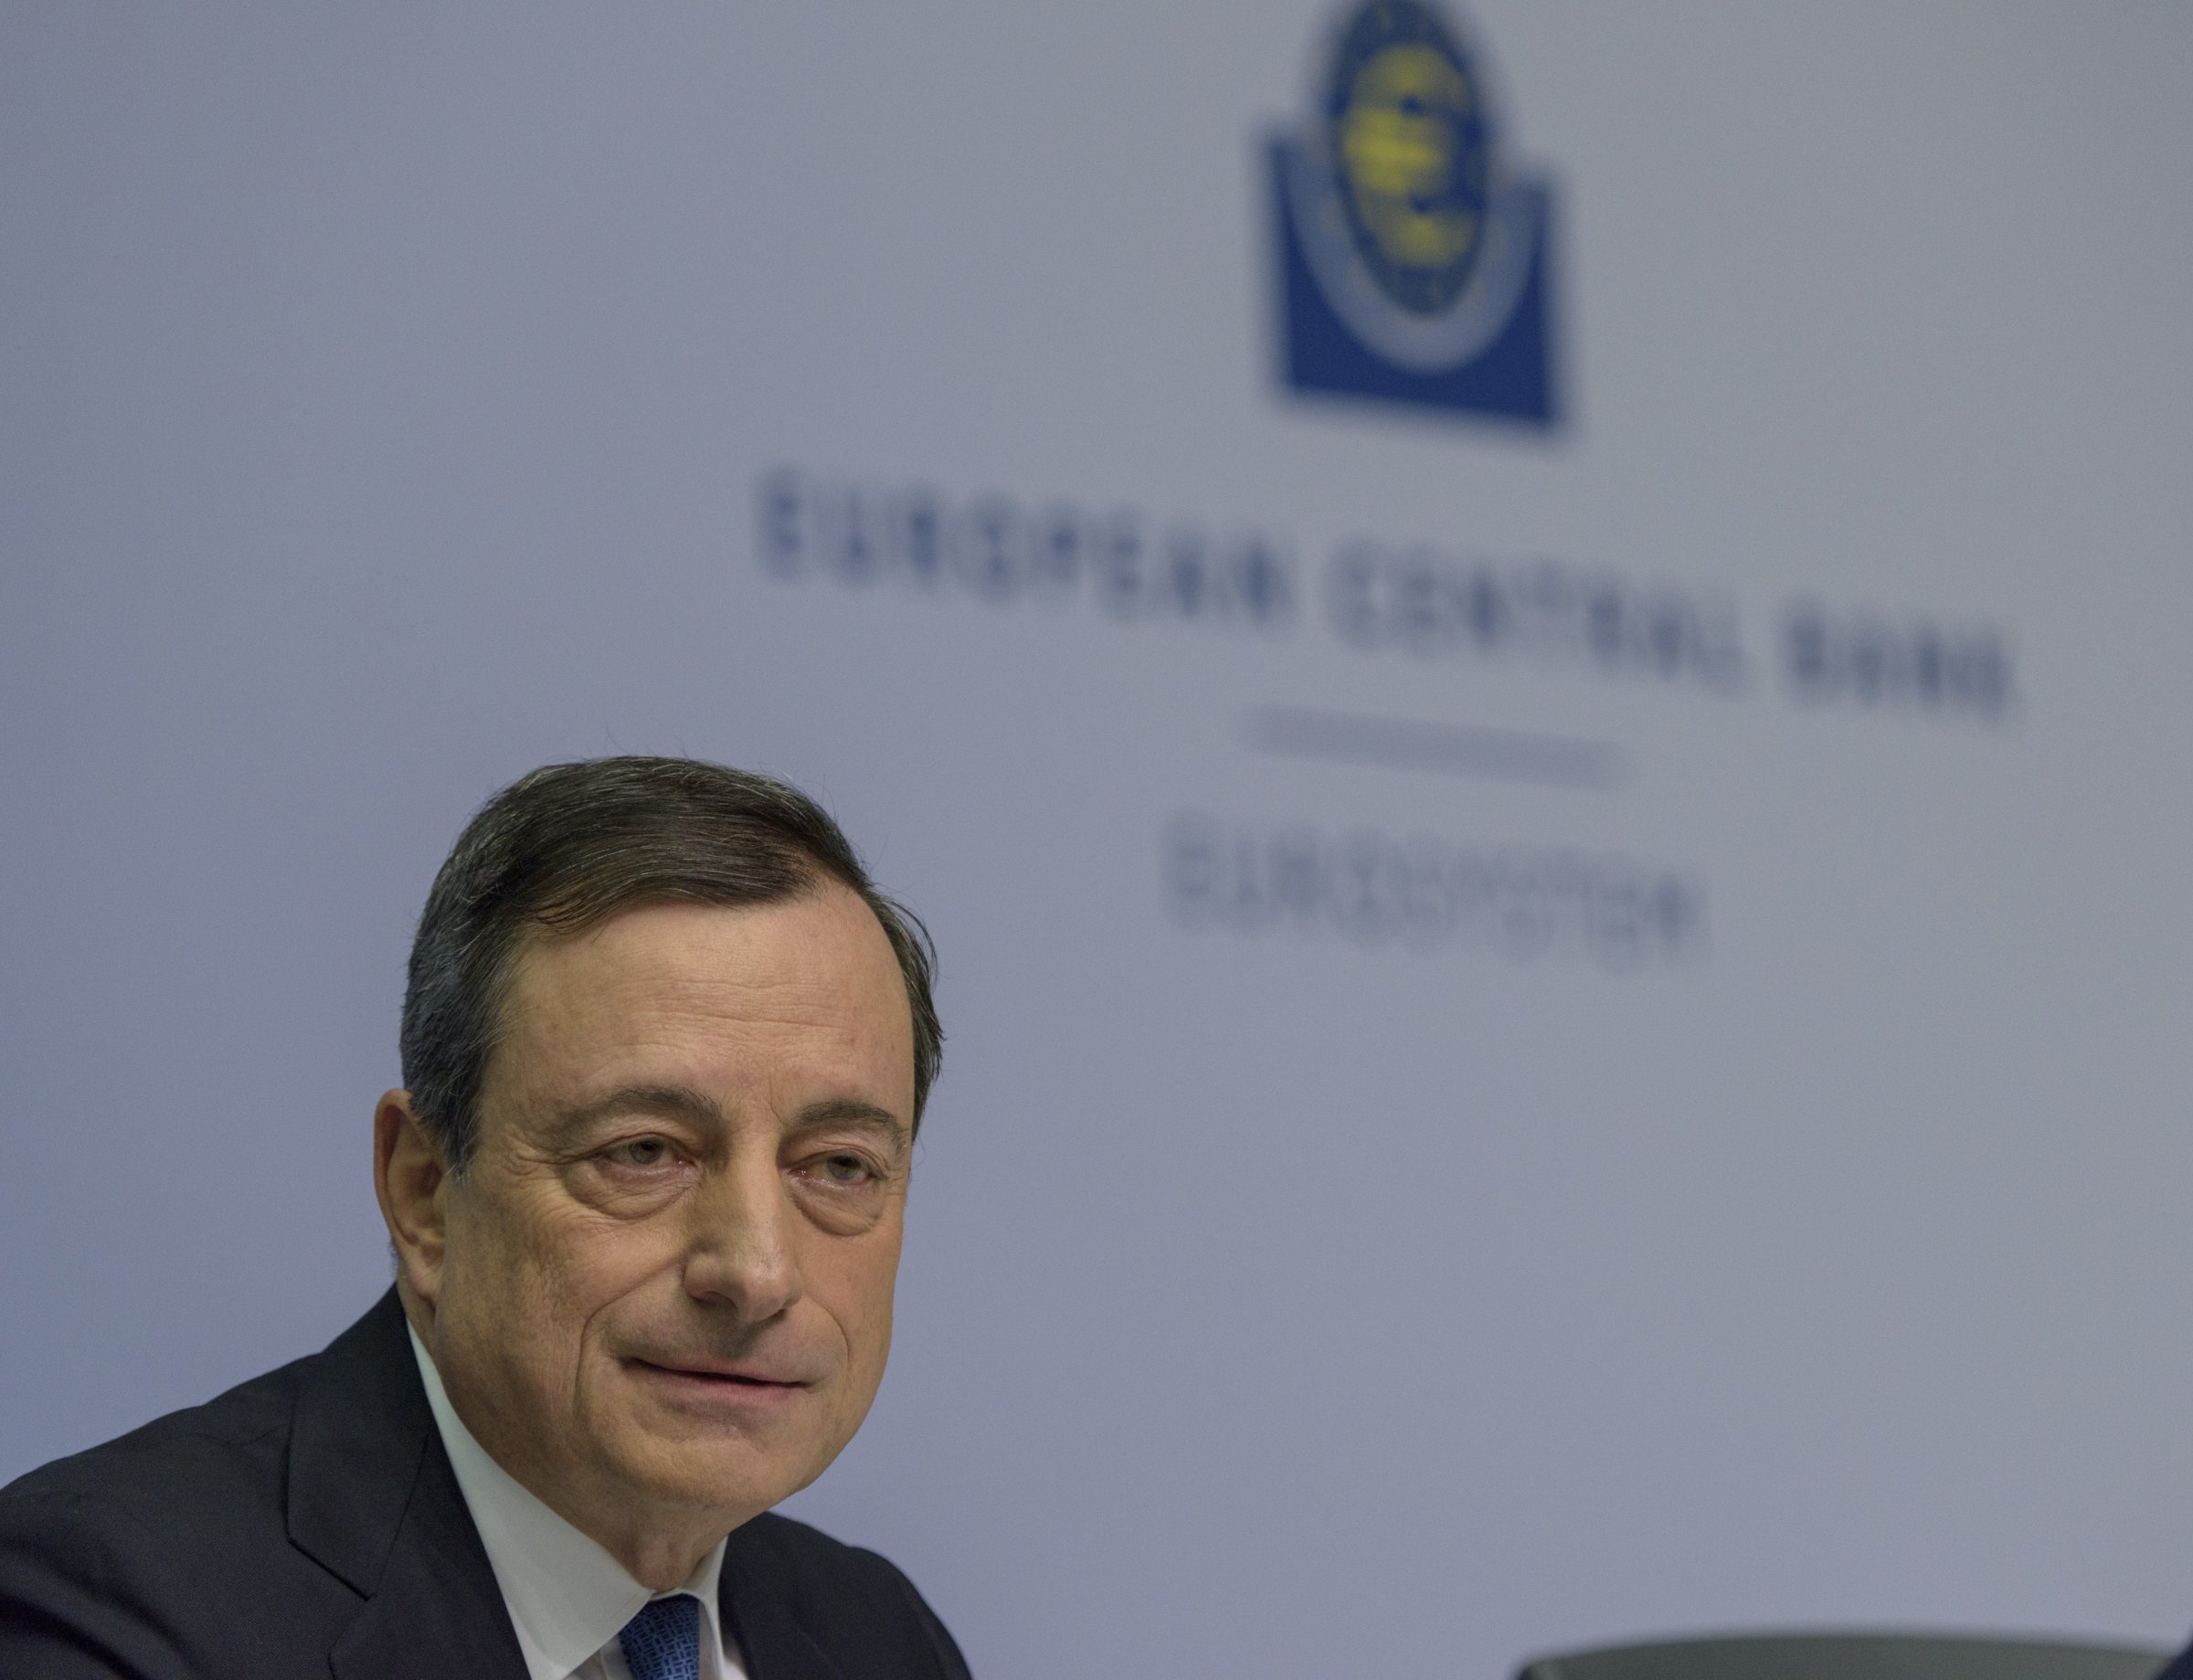 European Central Bank President Mario Draghi meets the press at the European Central Bank Headquarters in Frankfurt on Jan. 22, 2015.